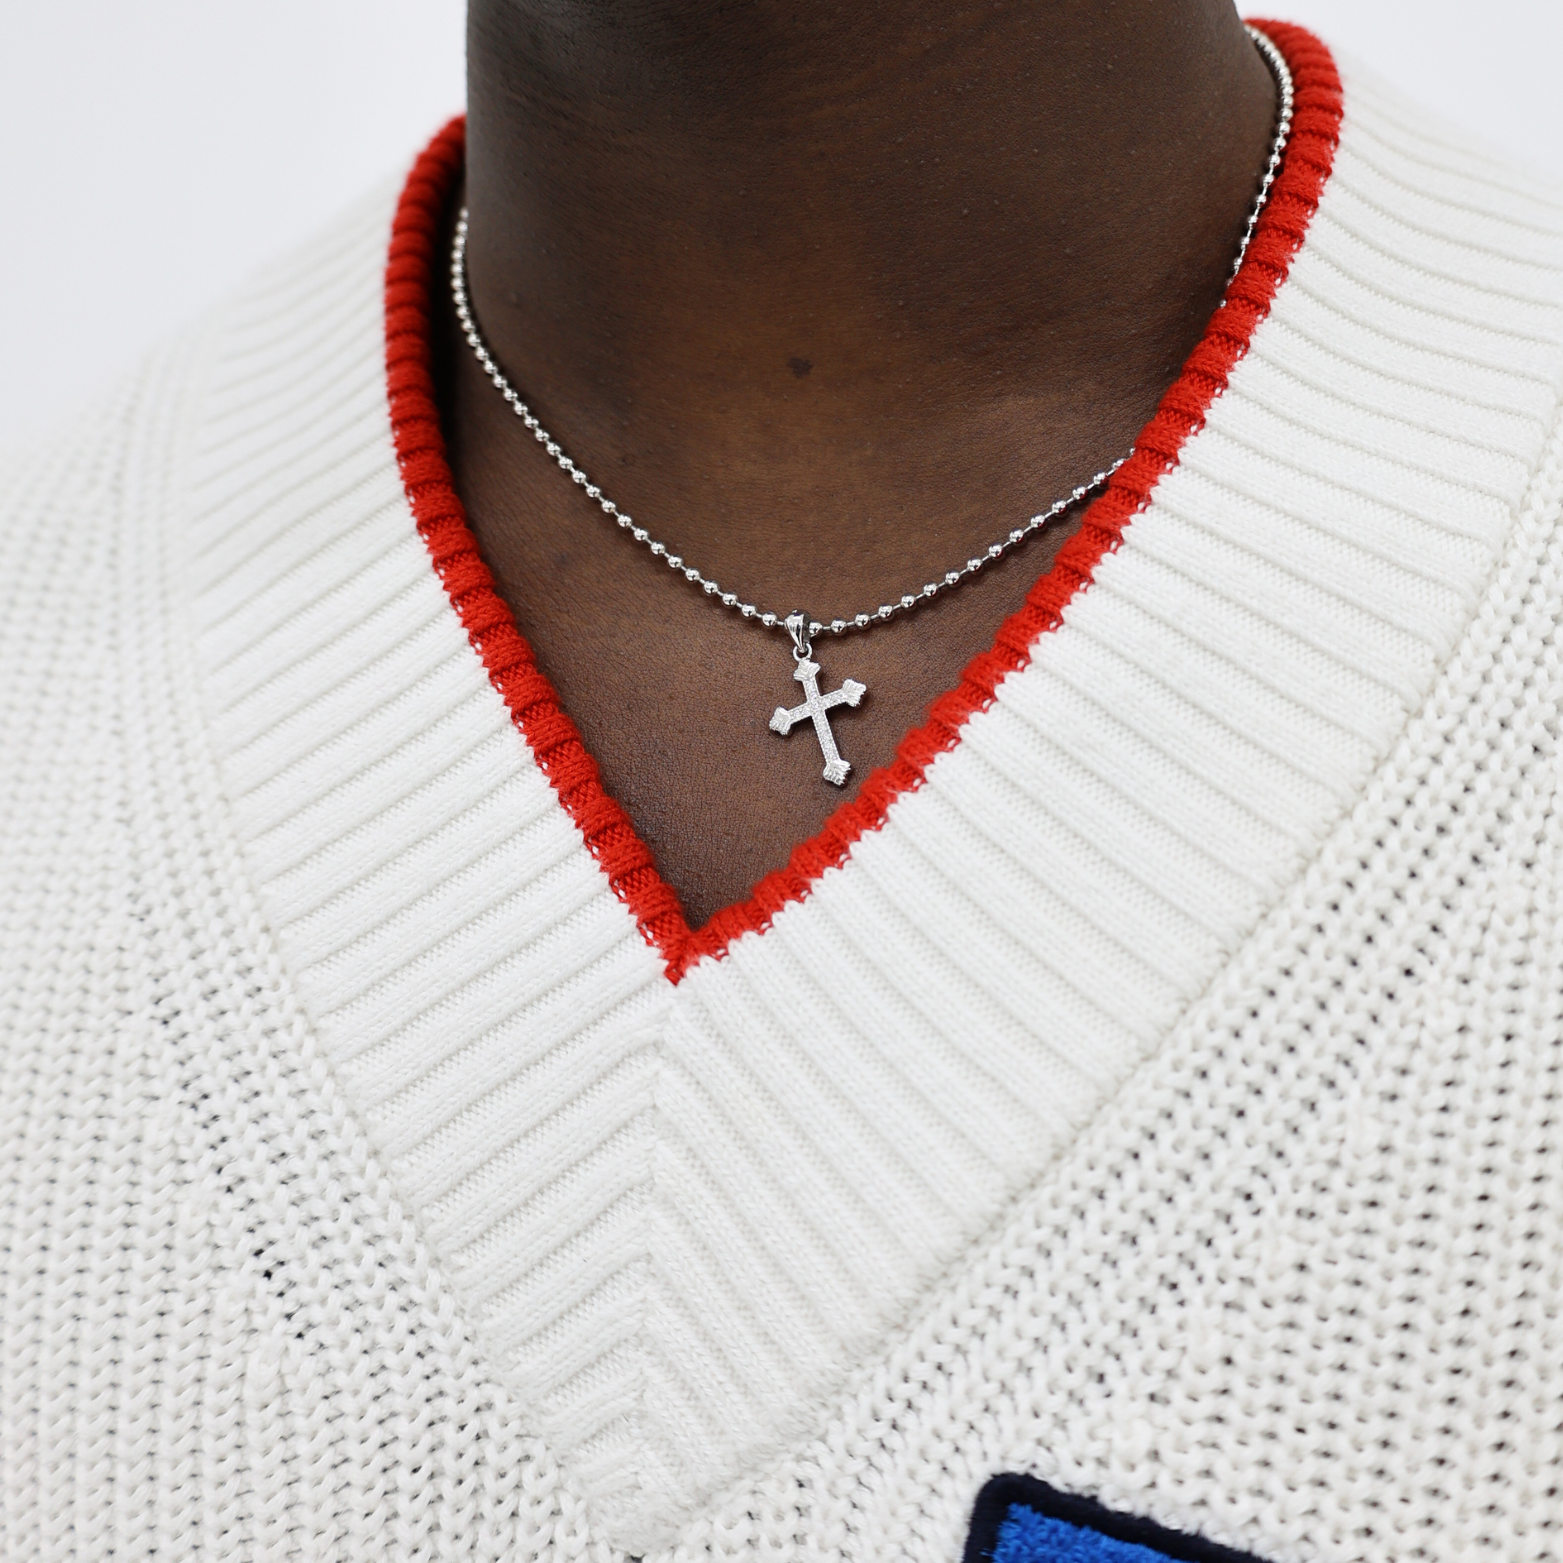 .925 single row cross pendant & necklace